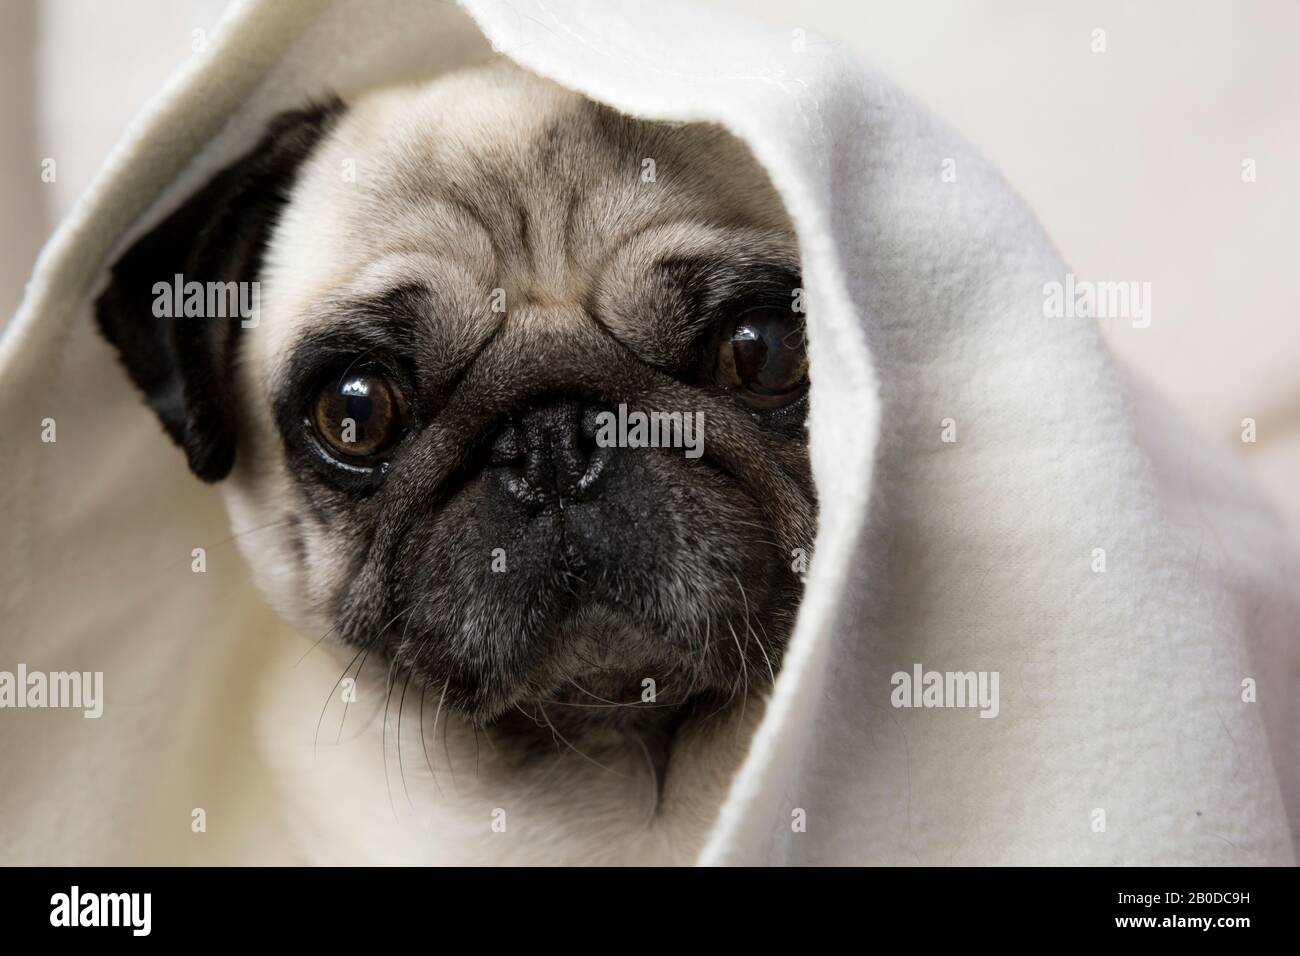 Adorable Pug dog close up portrait under white blanket. Brachycephalic flat face breed pet insurance vet care concept idea Stock Photo